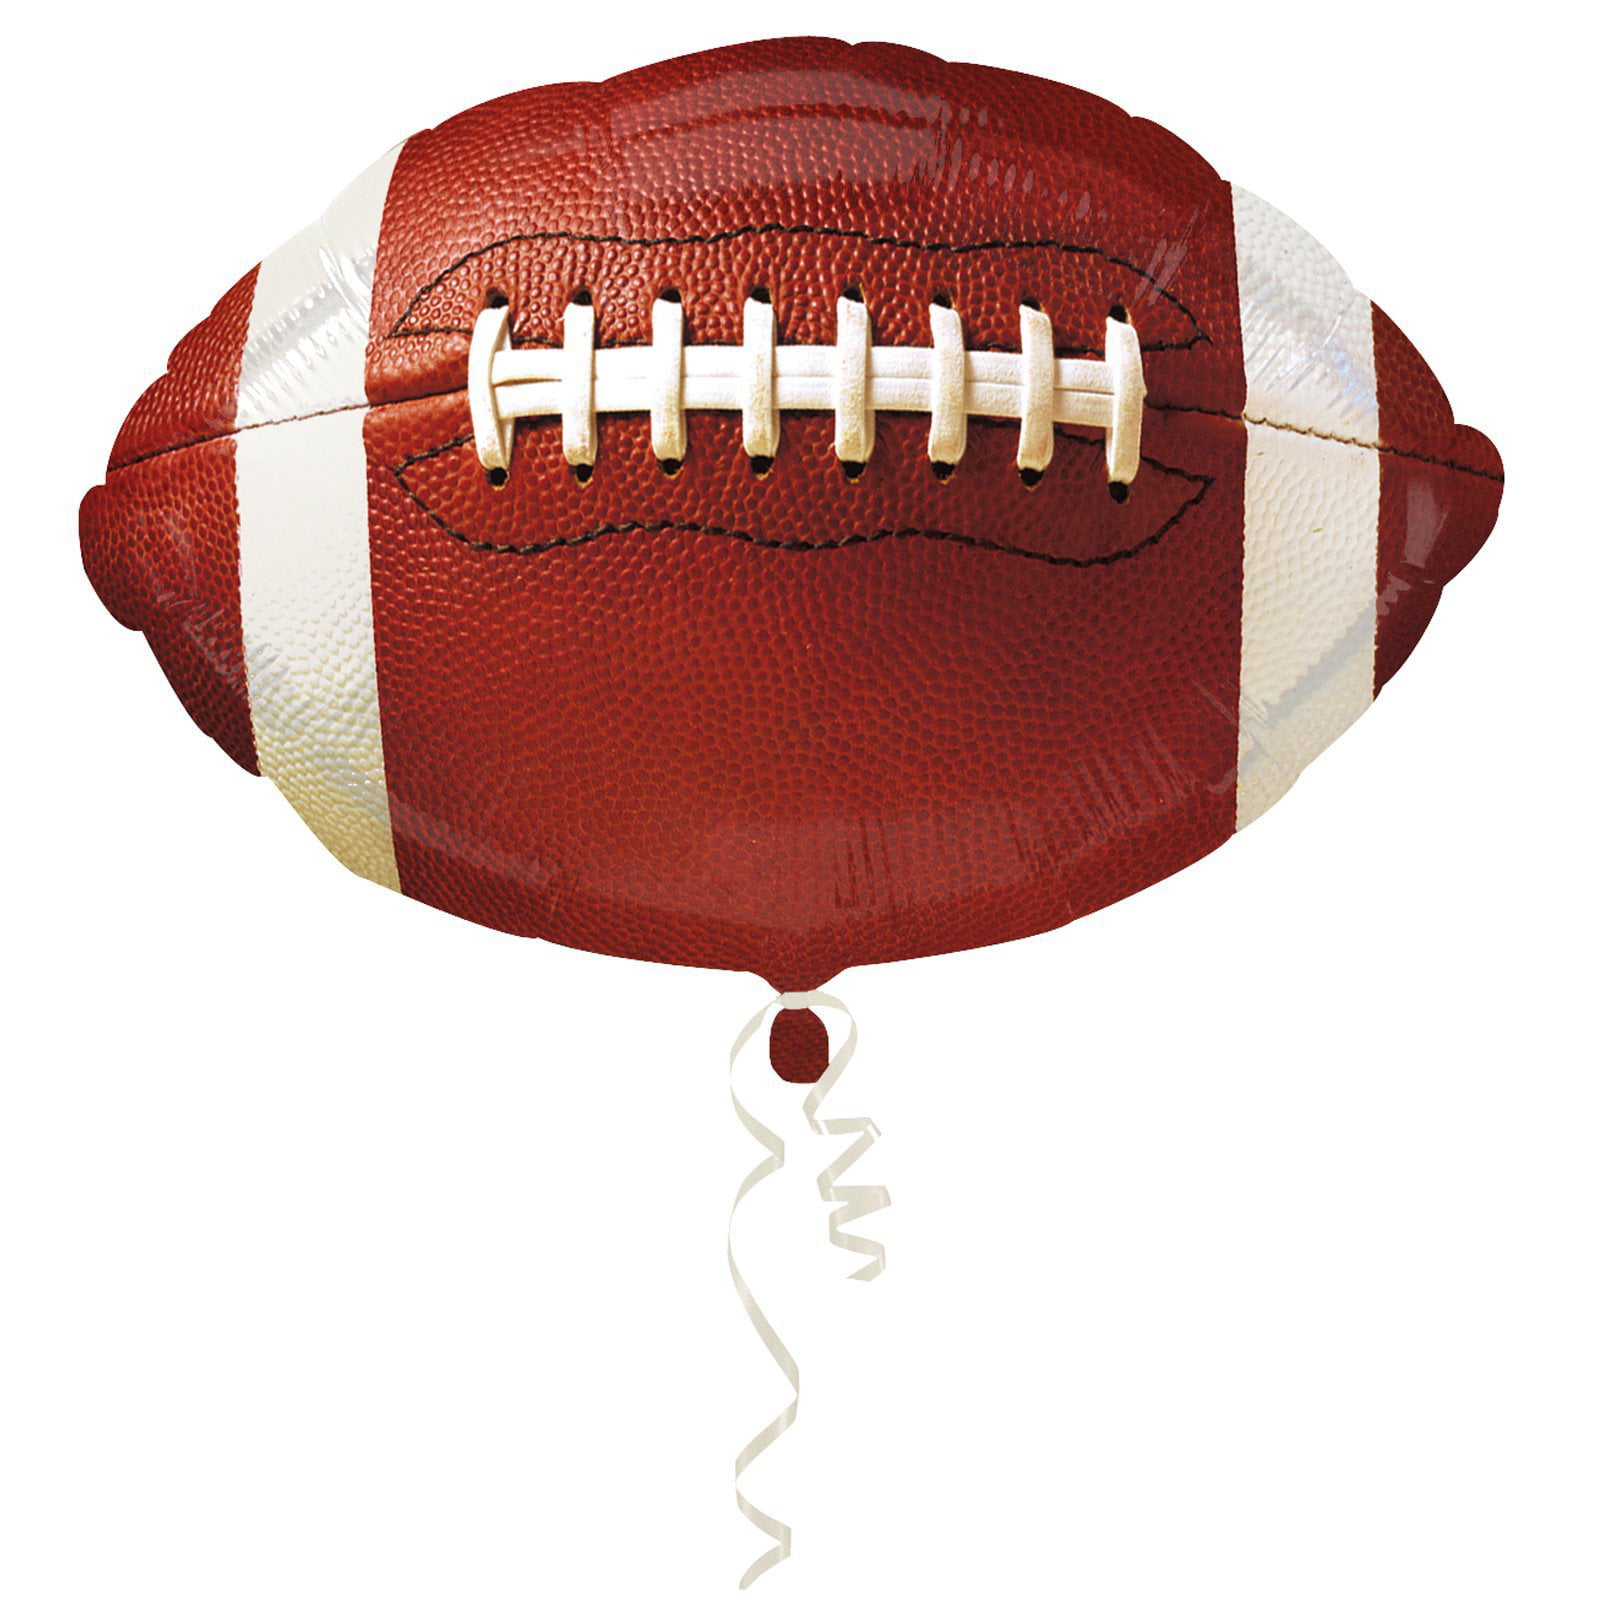 18" Super Bowl Championship Game Mylar Balloons FOOTBALL Shaped Sports Ball 2